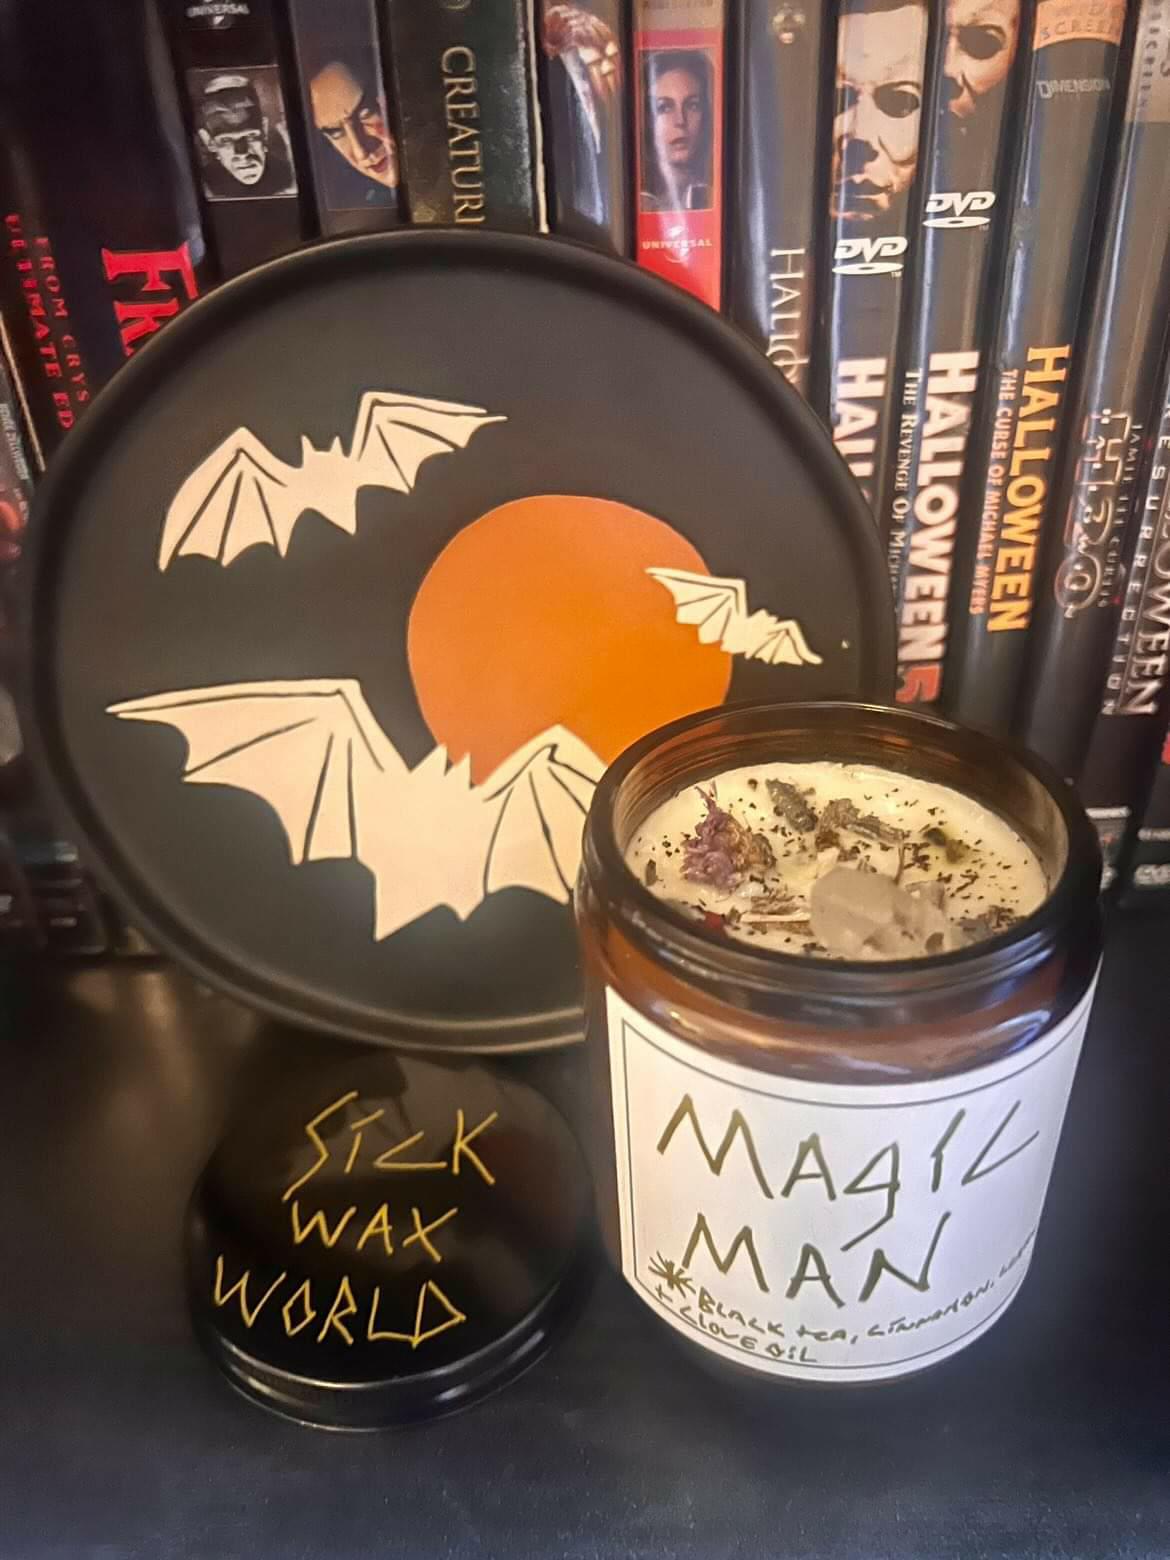 Magic Man CANDLE by Sick Wax World